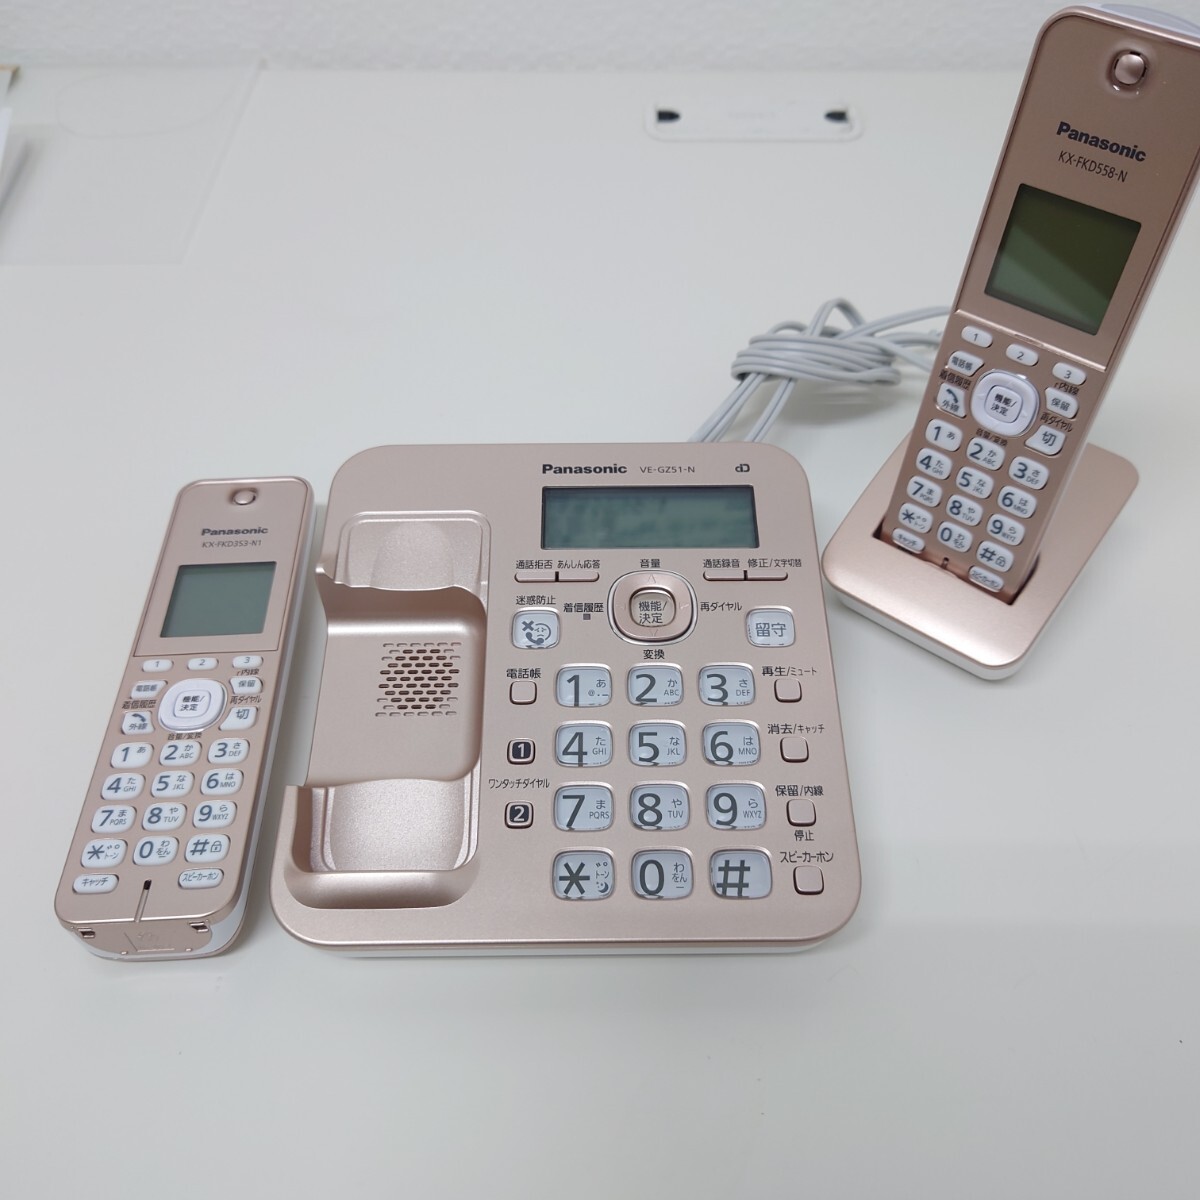 UU250 beautiful goods Panasonic Panasonic cordless telephone machine RU*RU*RUru*ru*ruVE-GZ51-N pink gold BARR